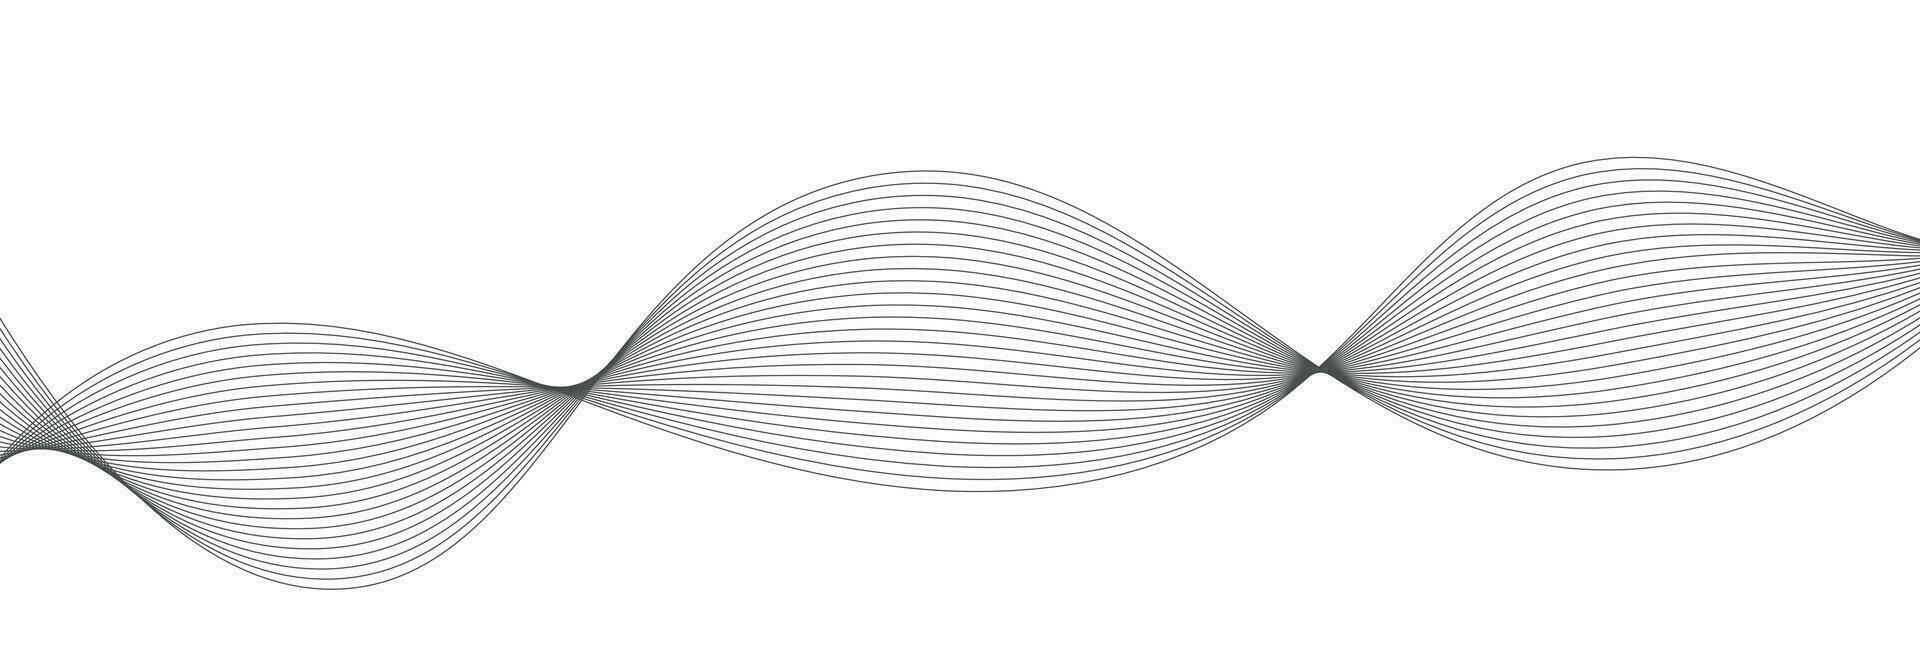 modern vektor bakgrund med svart vågig rader.